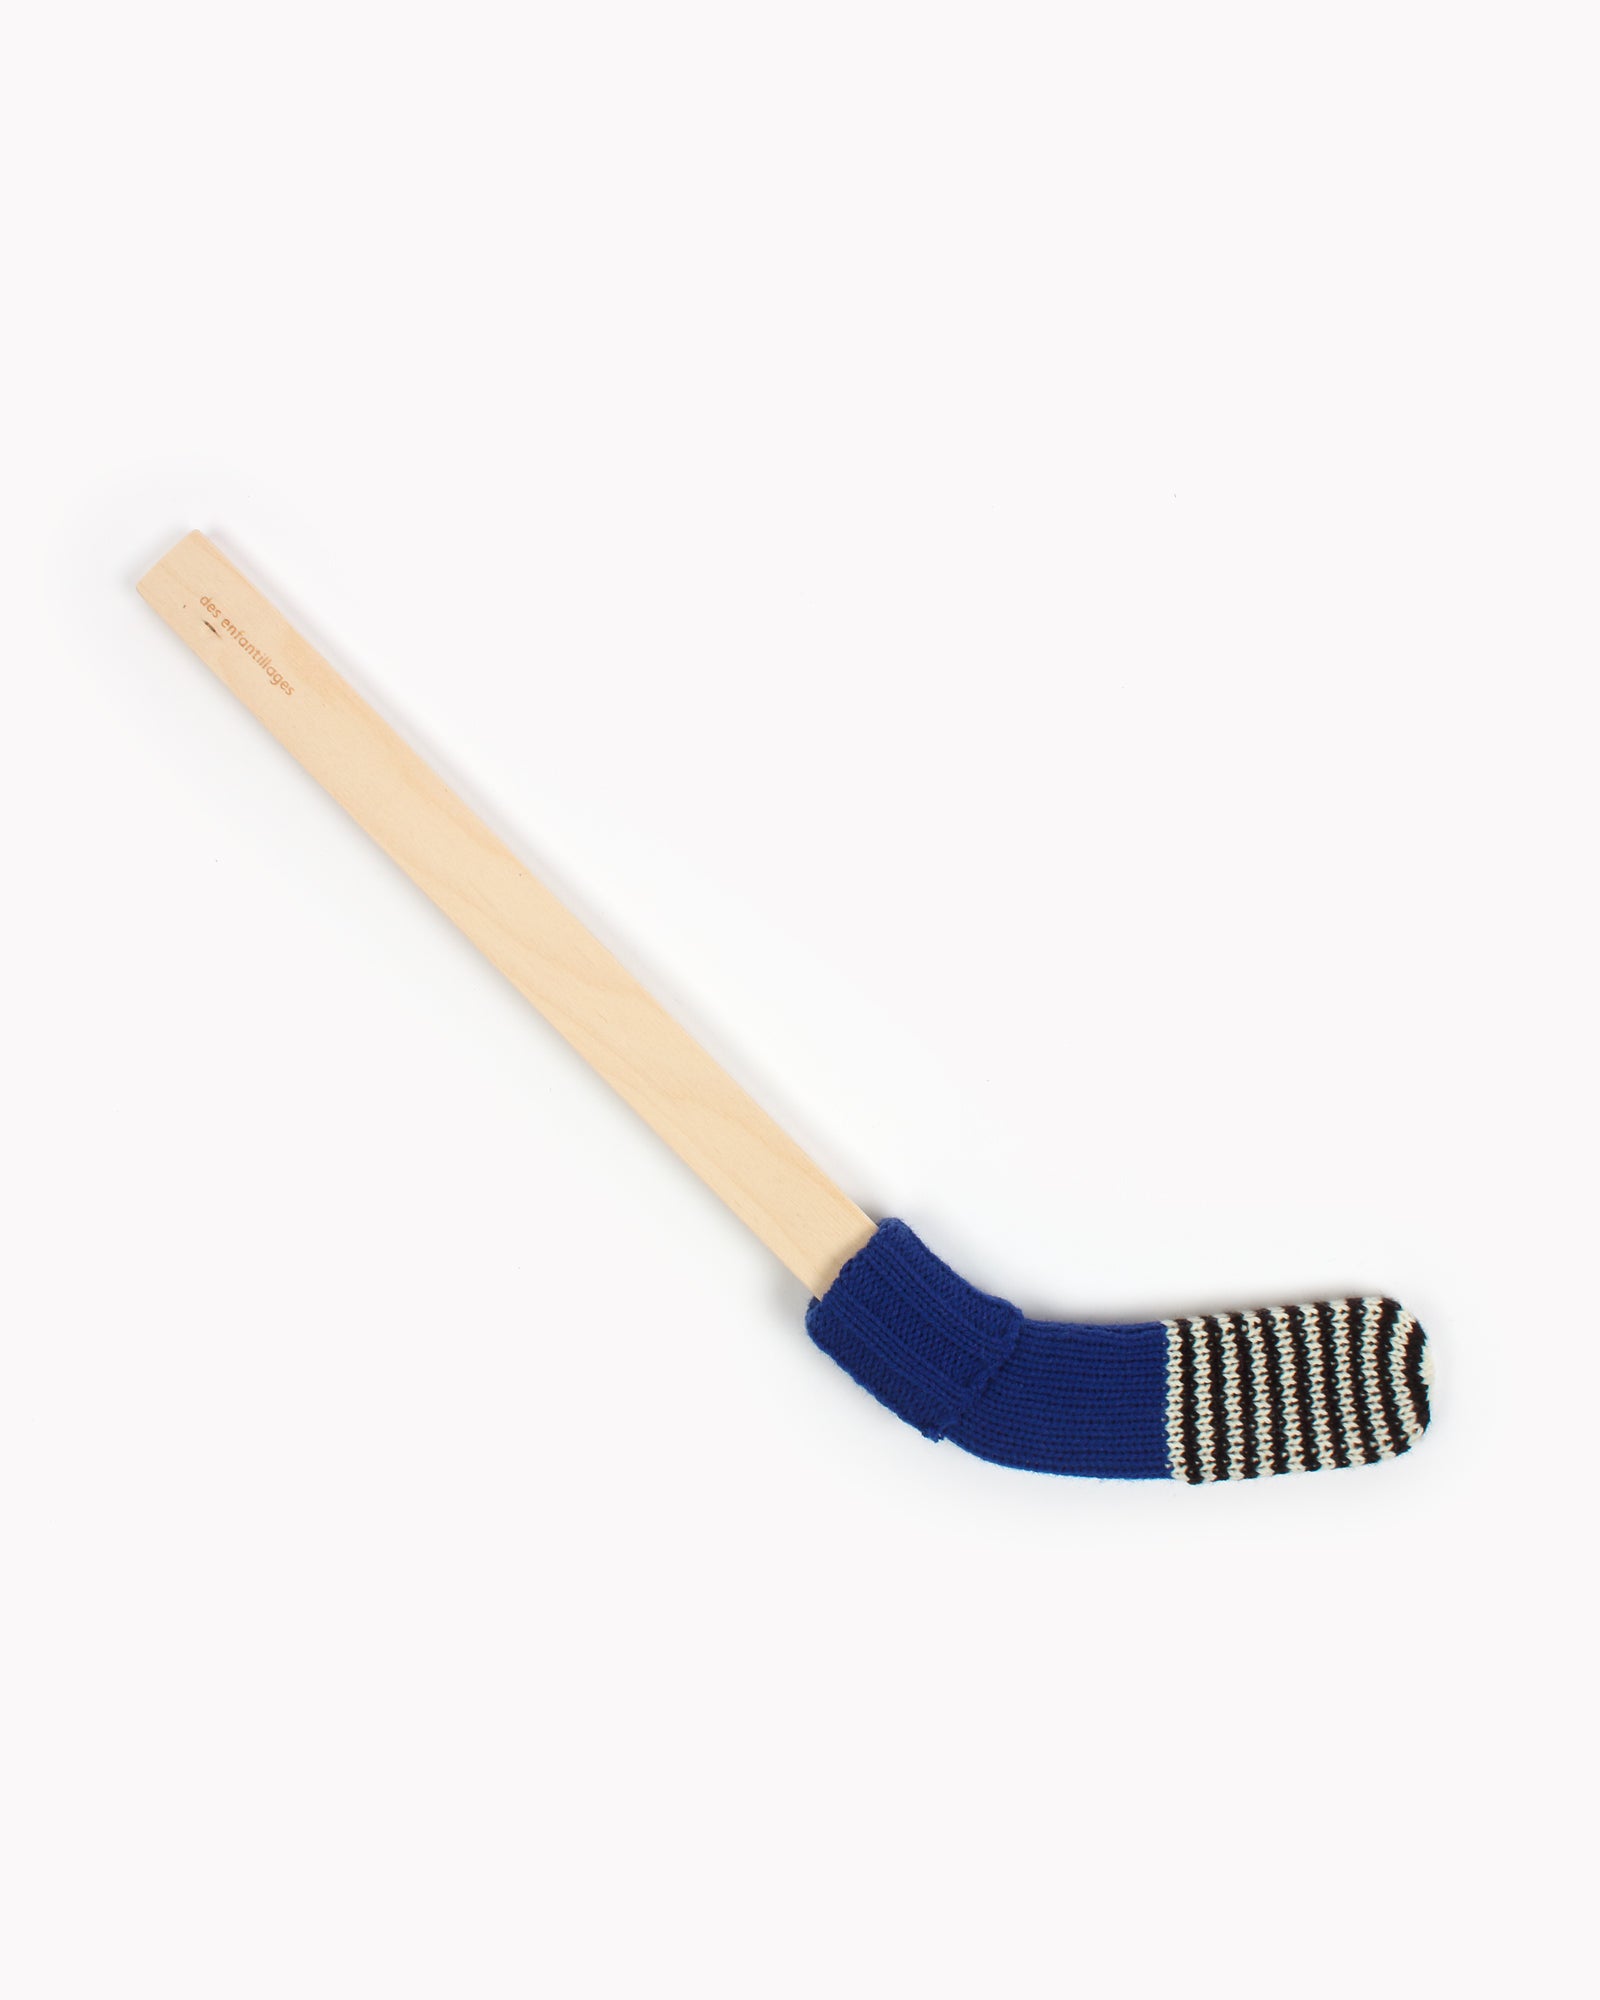 Bâton de hockey ― bleu, noir et crème